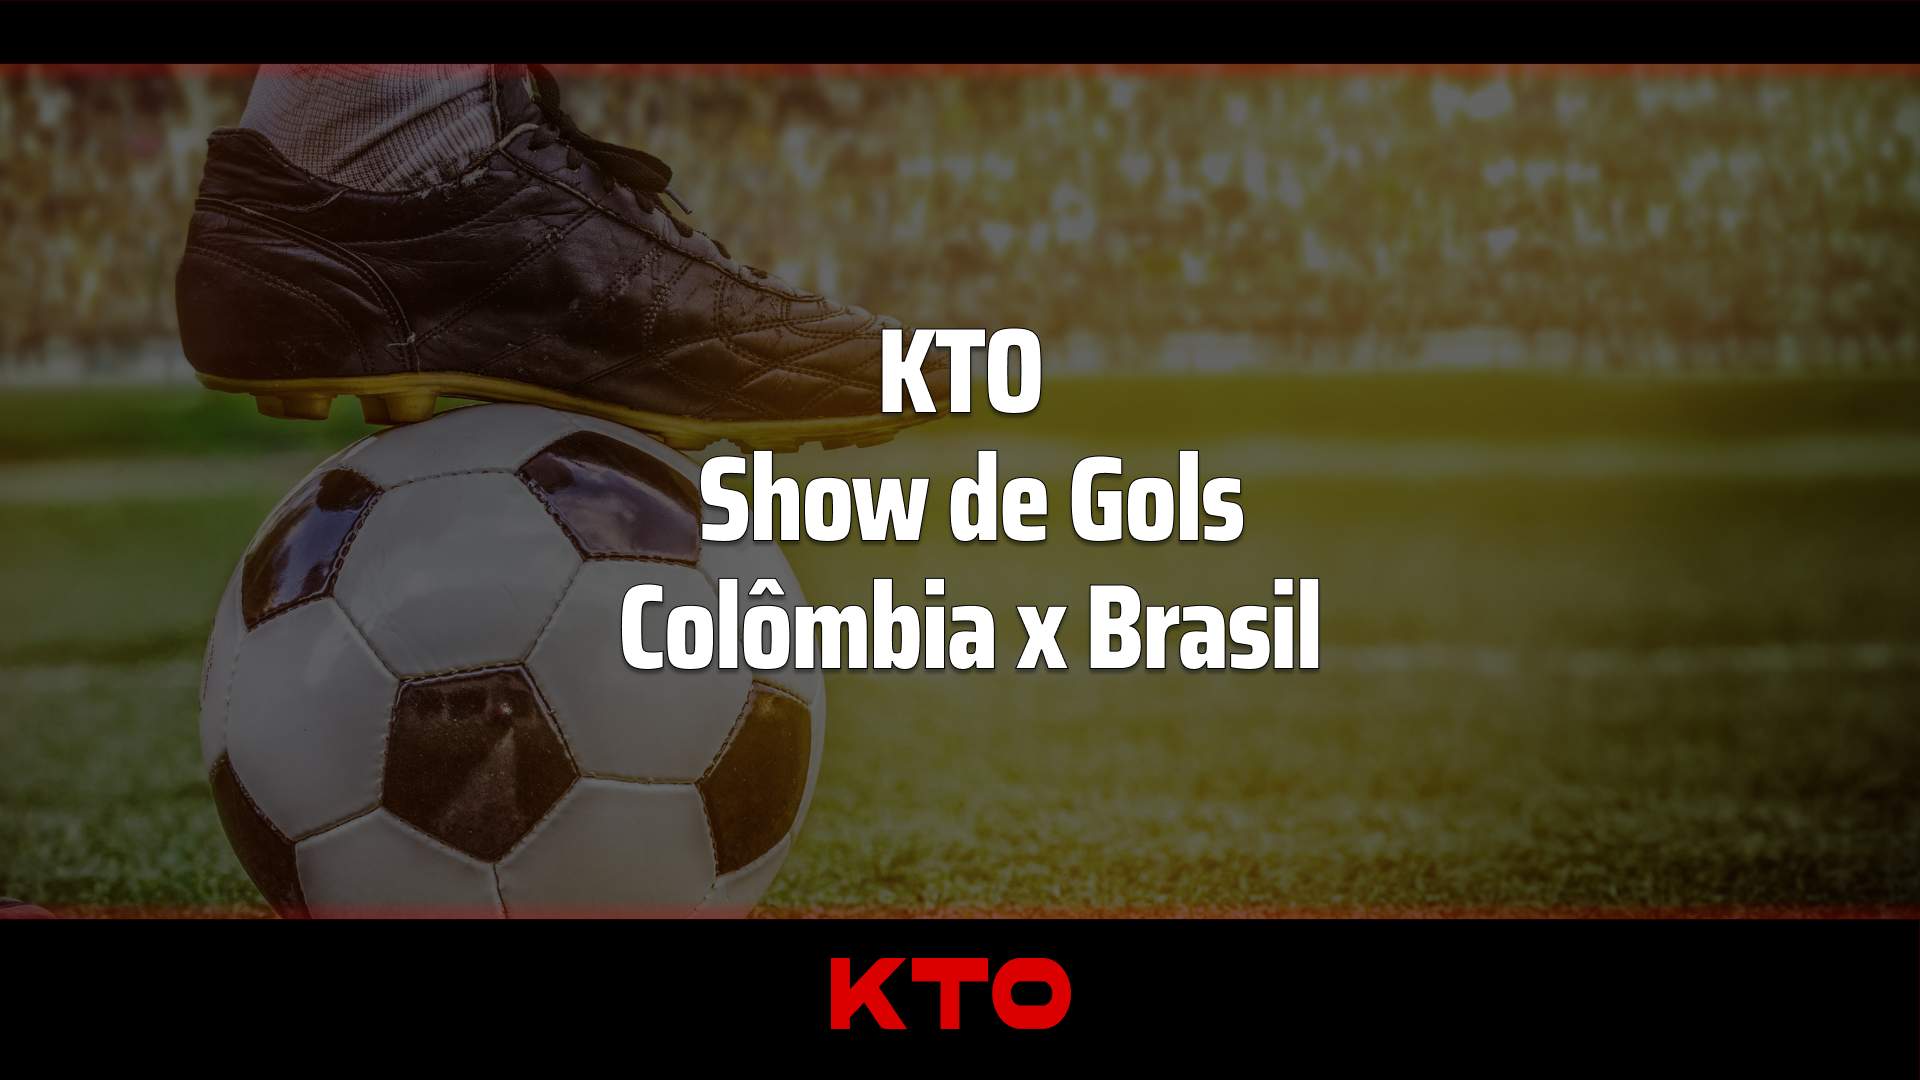 Show de Gols KTO no Colômbia x Brasil